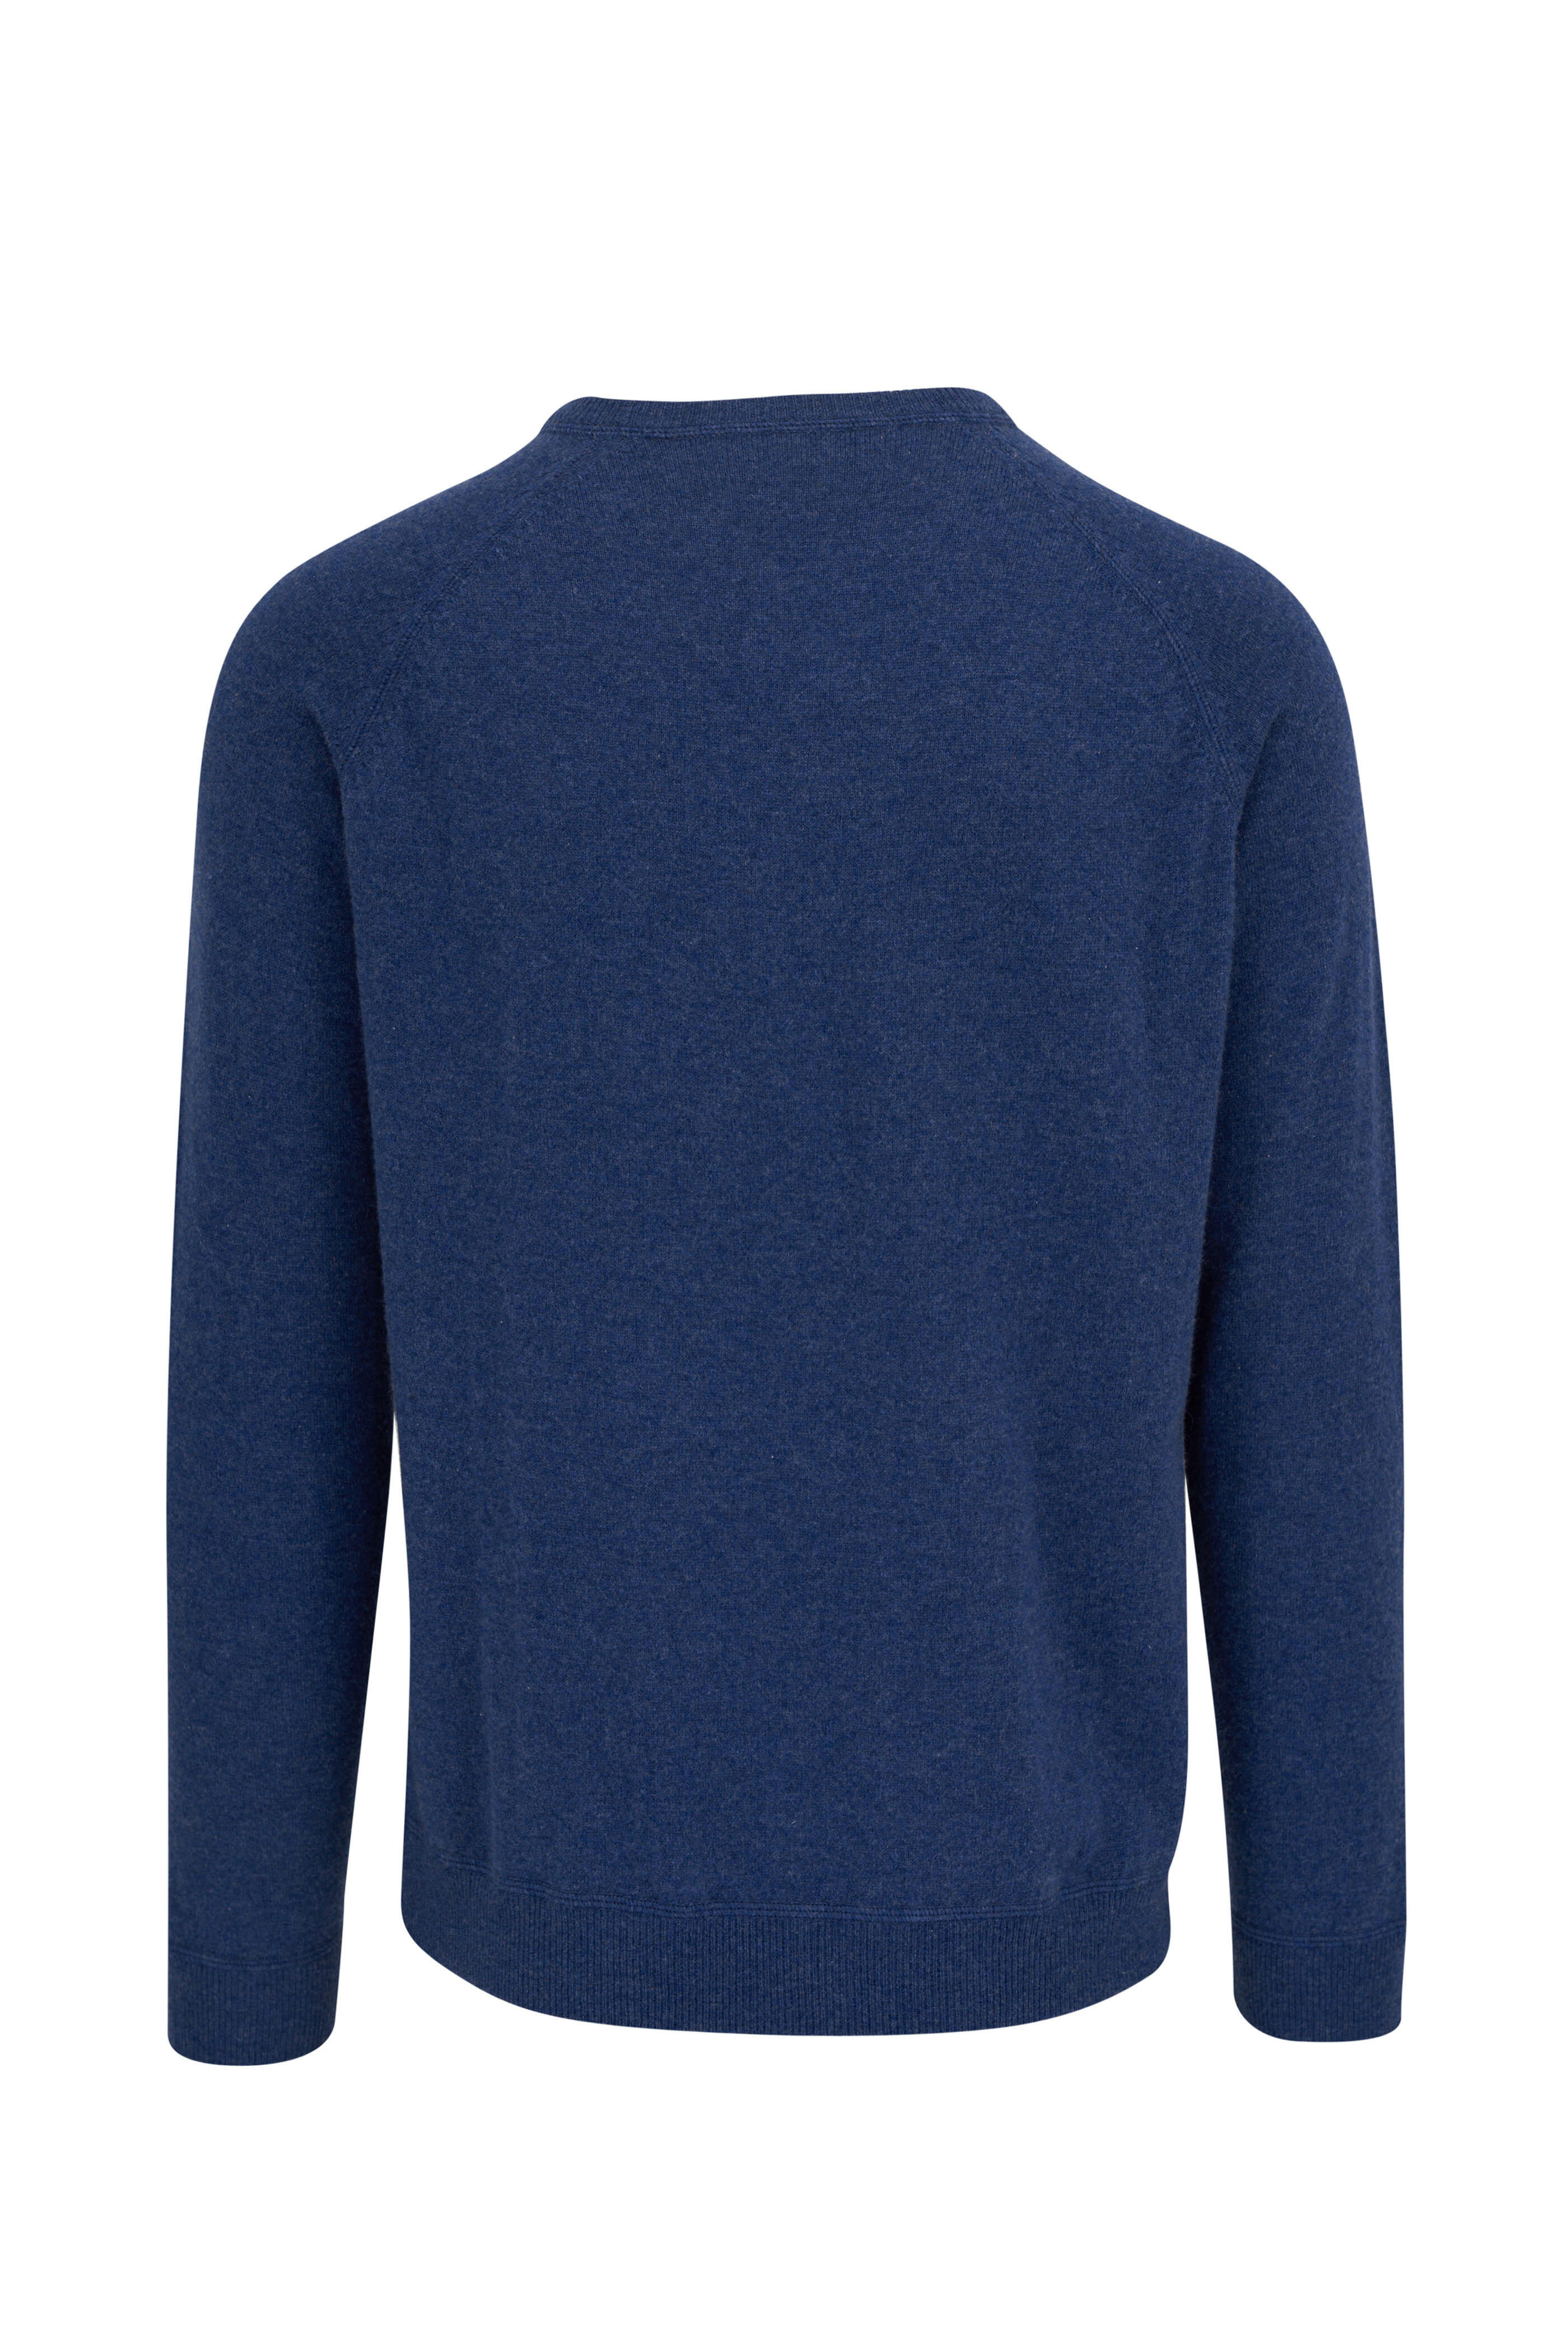 Kinross - Midnight Blue Crewneck Sweater | Mitchell Stores